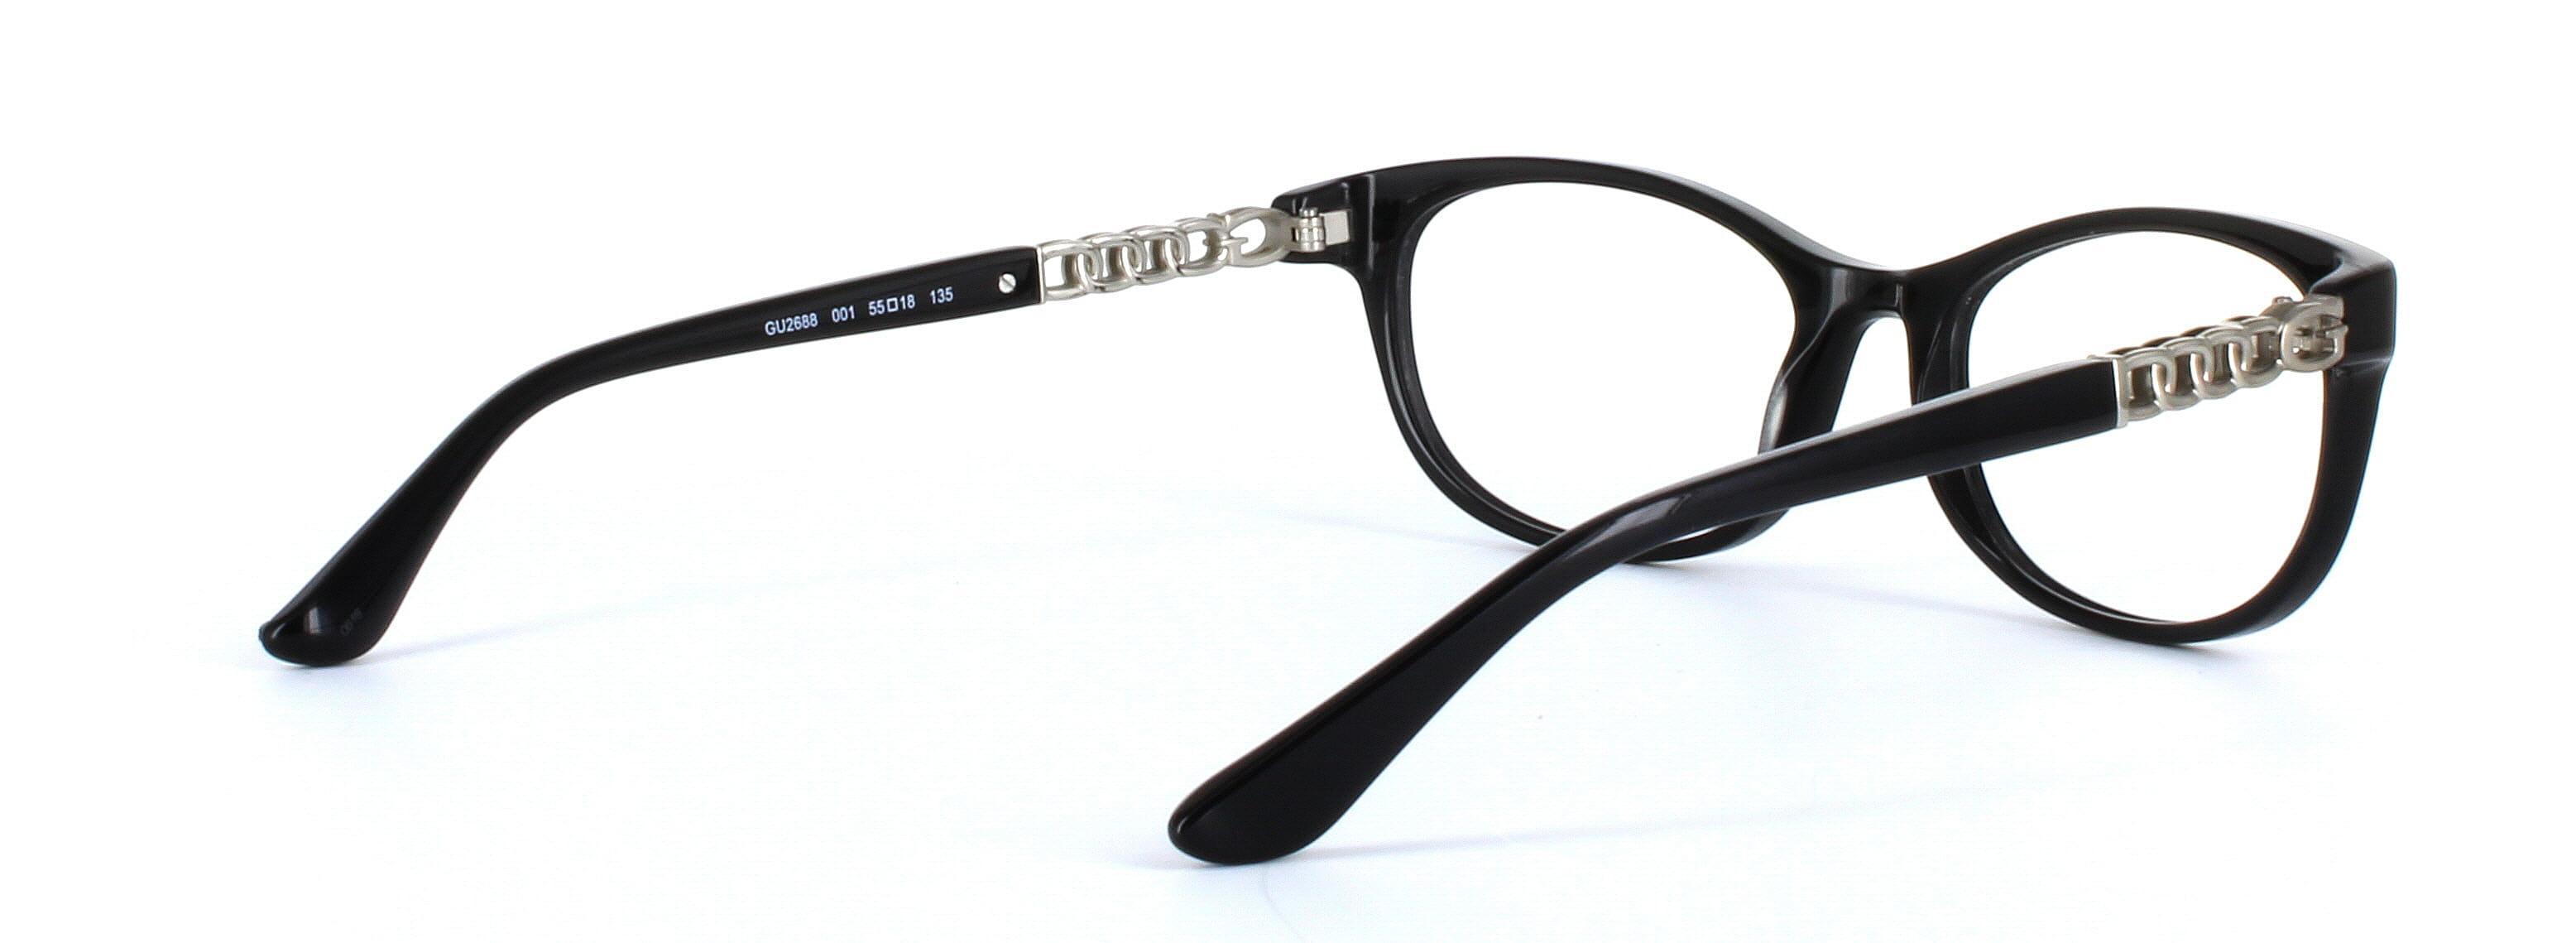 GUESS (GU2688-001) Black Full Rim Oval Acetate Glasses - Image View 4